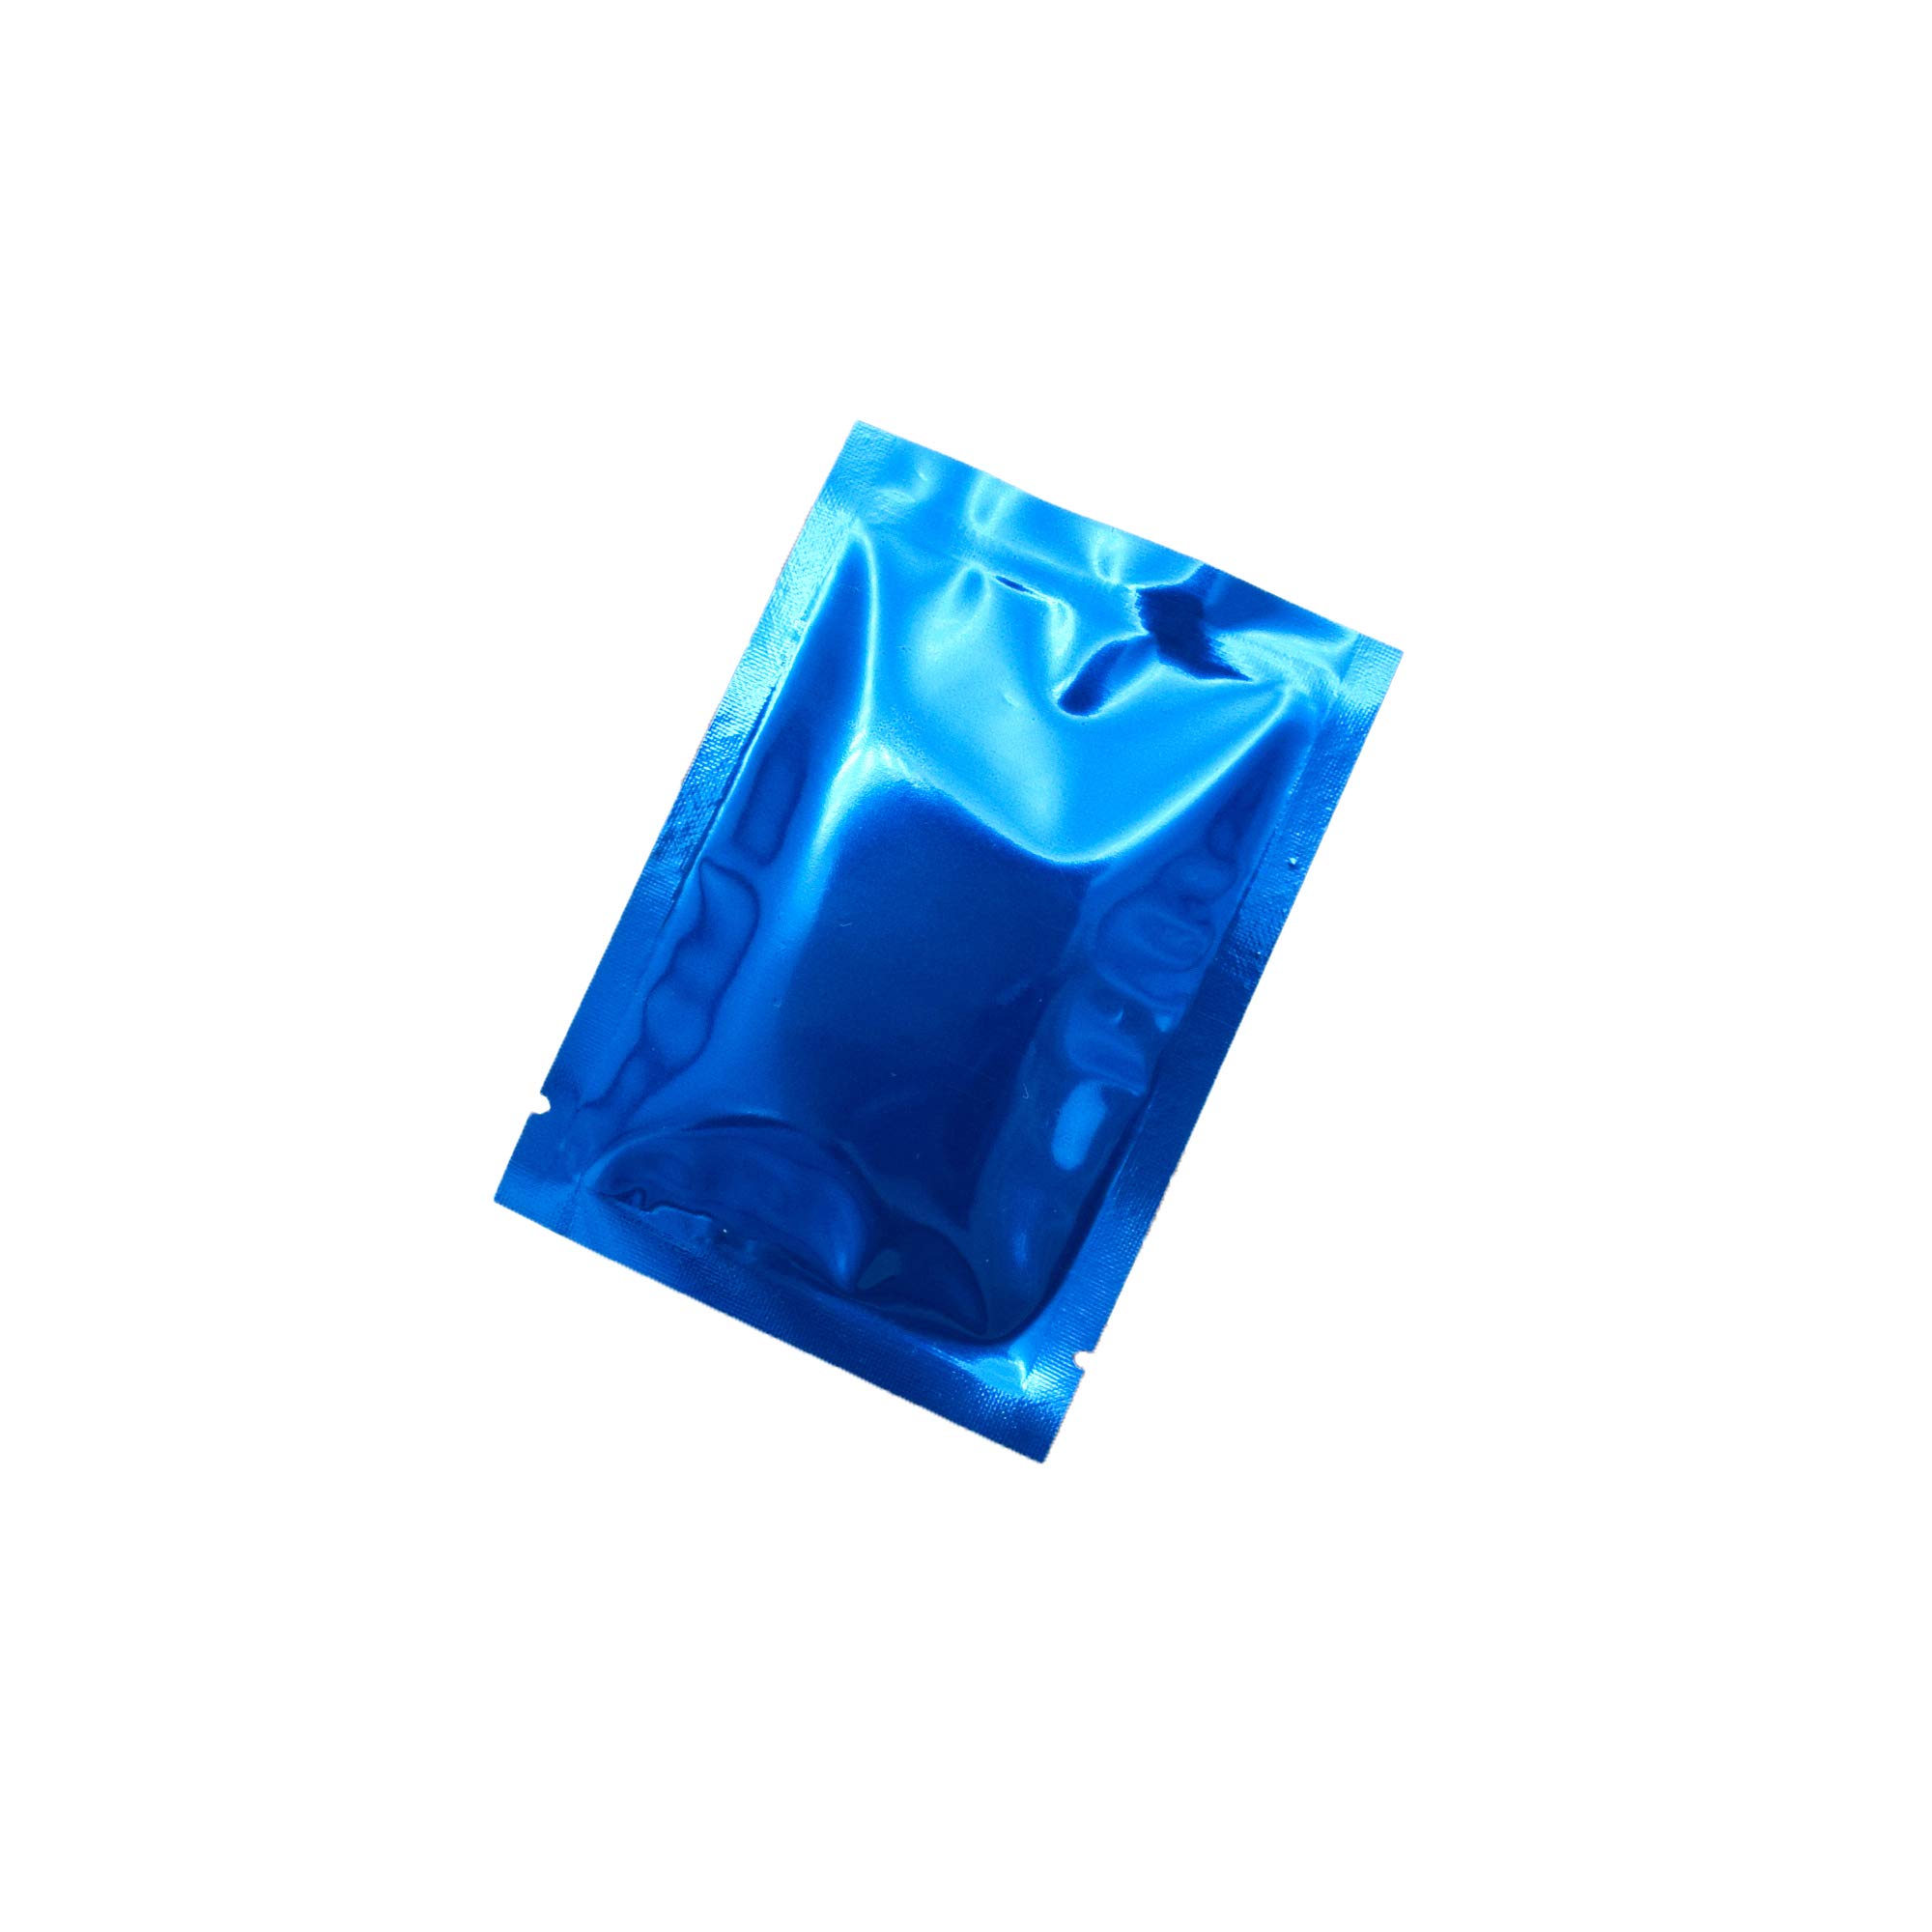 200PCS Glossy Electric Blue Metallic Mylar Foil Open Top Packaging Bags 12x18cm (4.7x7")